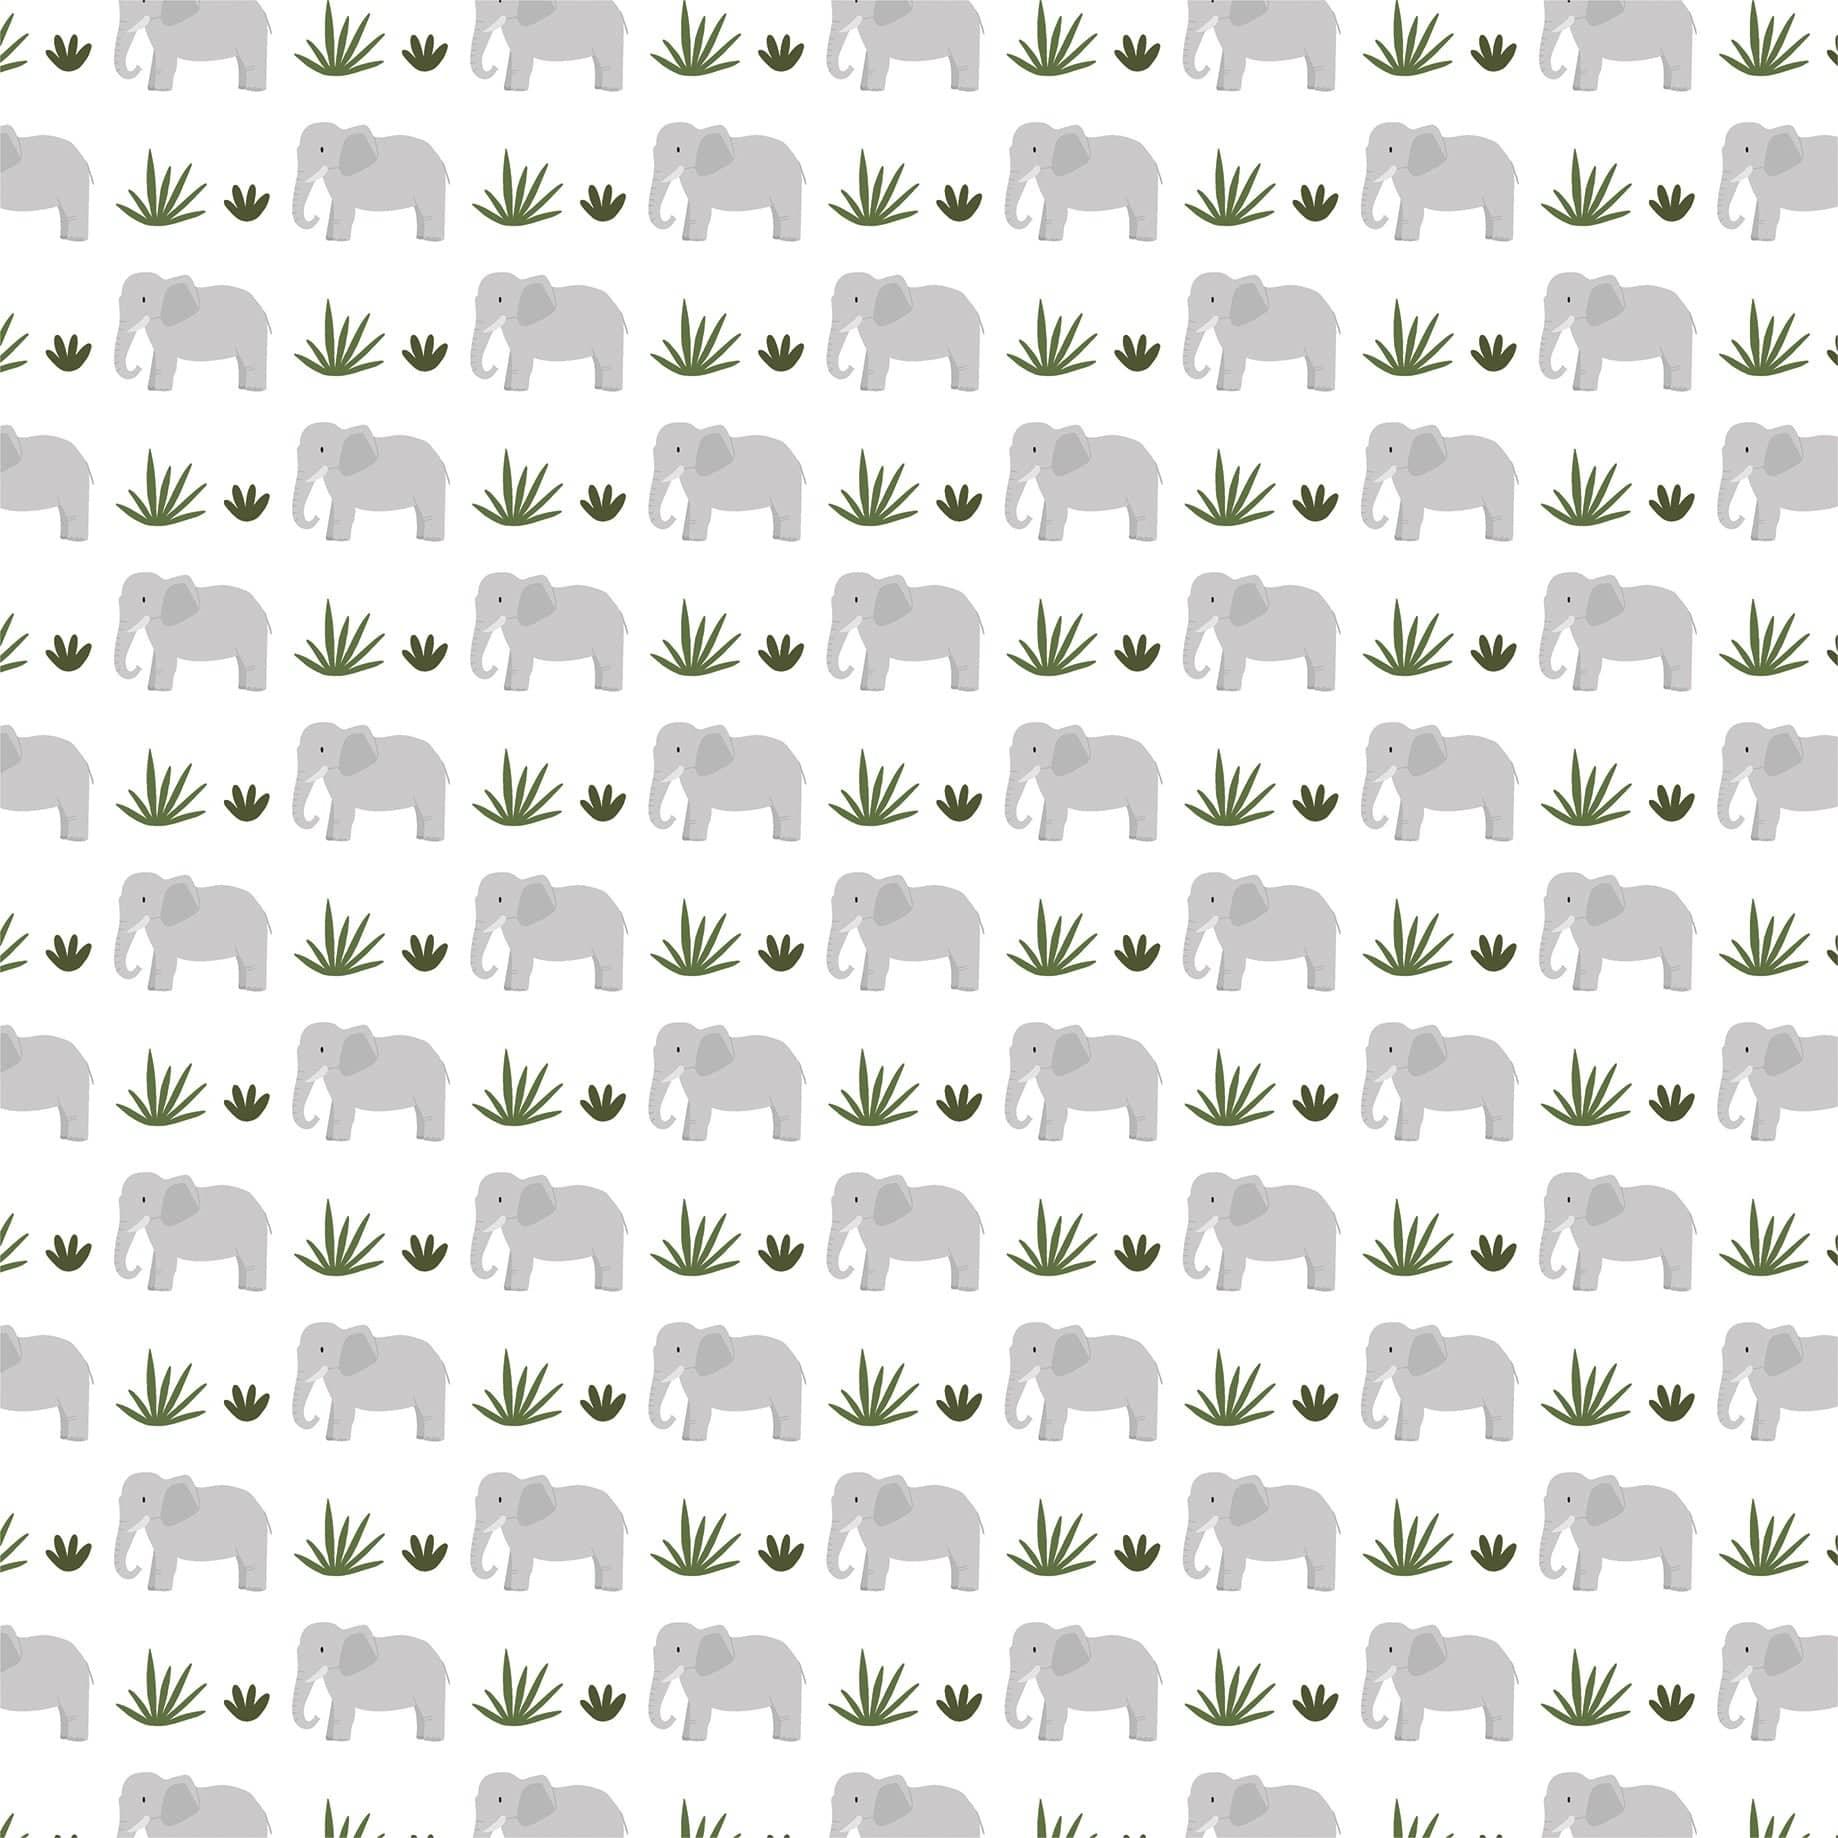 Little Explorer Collection Exploring Elephants 12 x 12 Double-Sided Scrapbook Paper by Echo Park Paper - Scrapbook Supply Companies